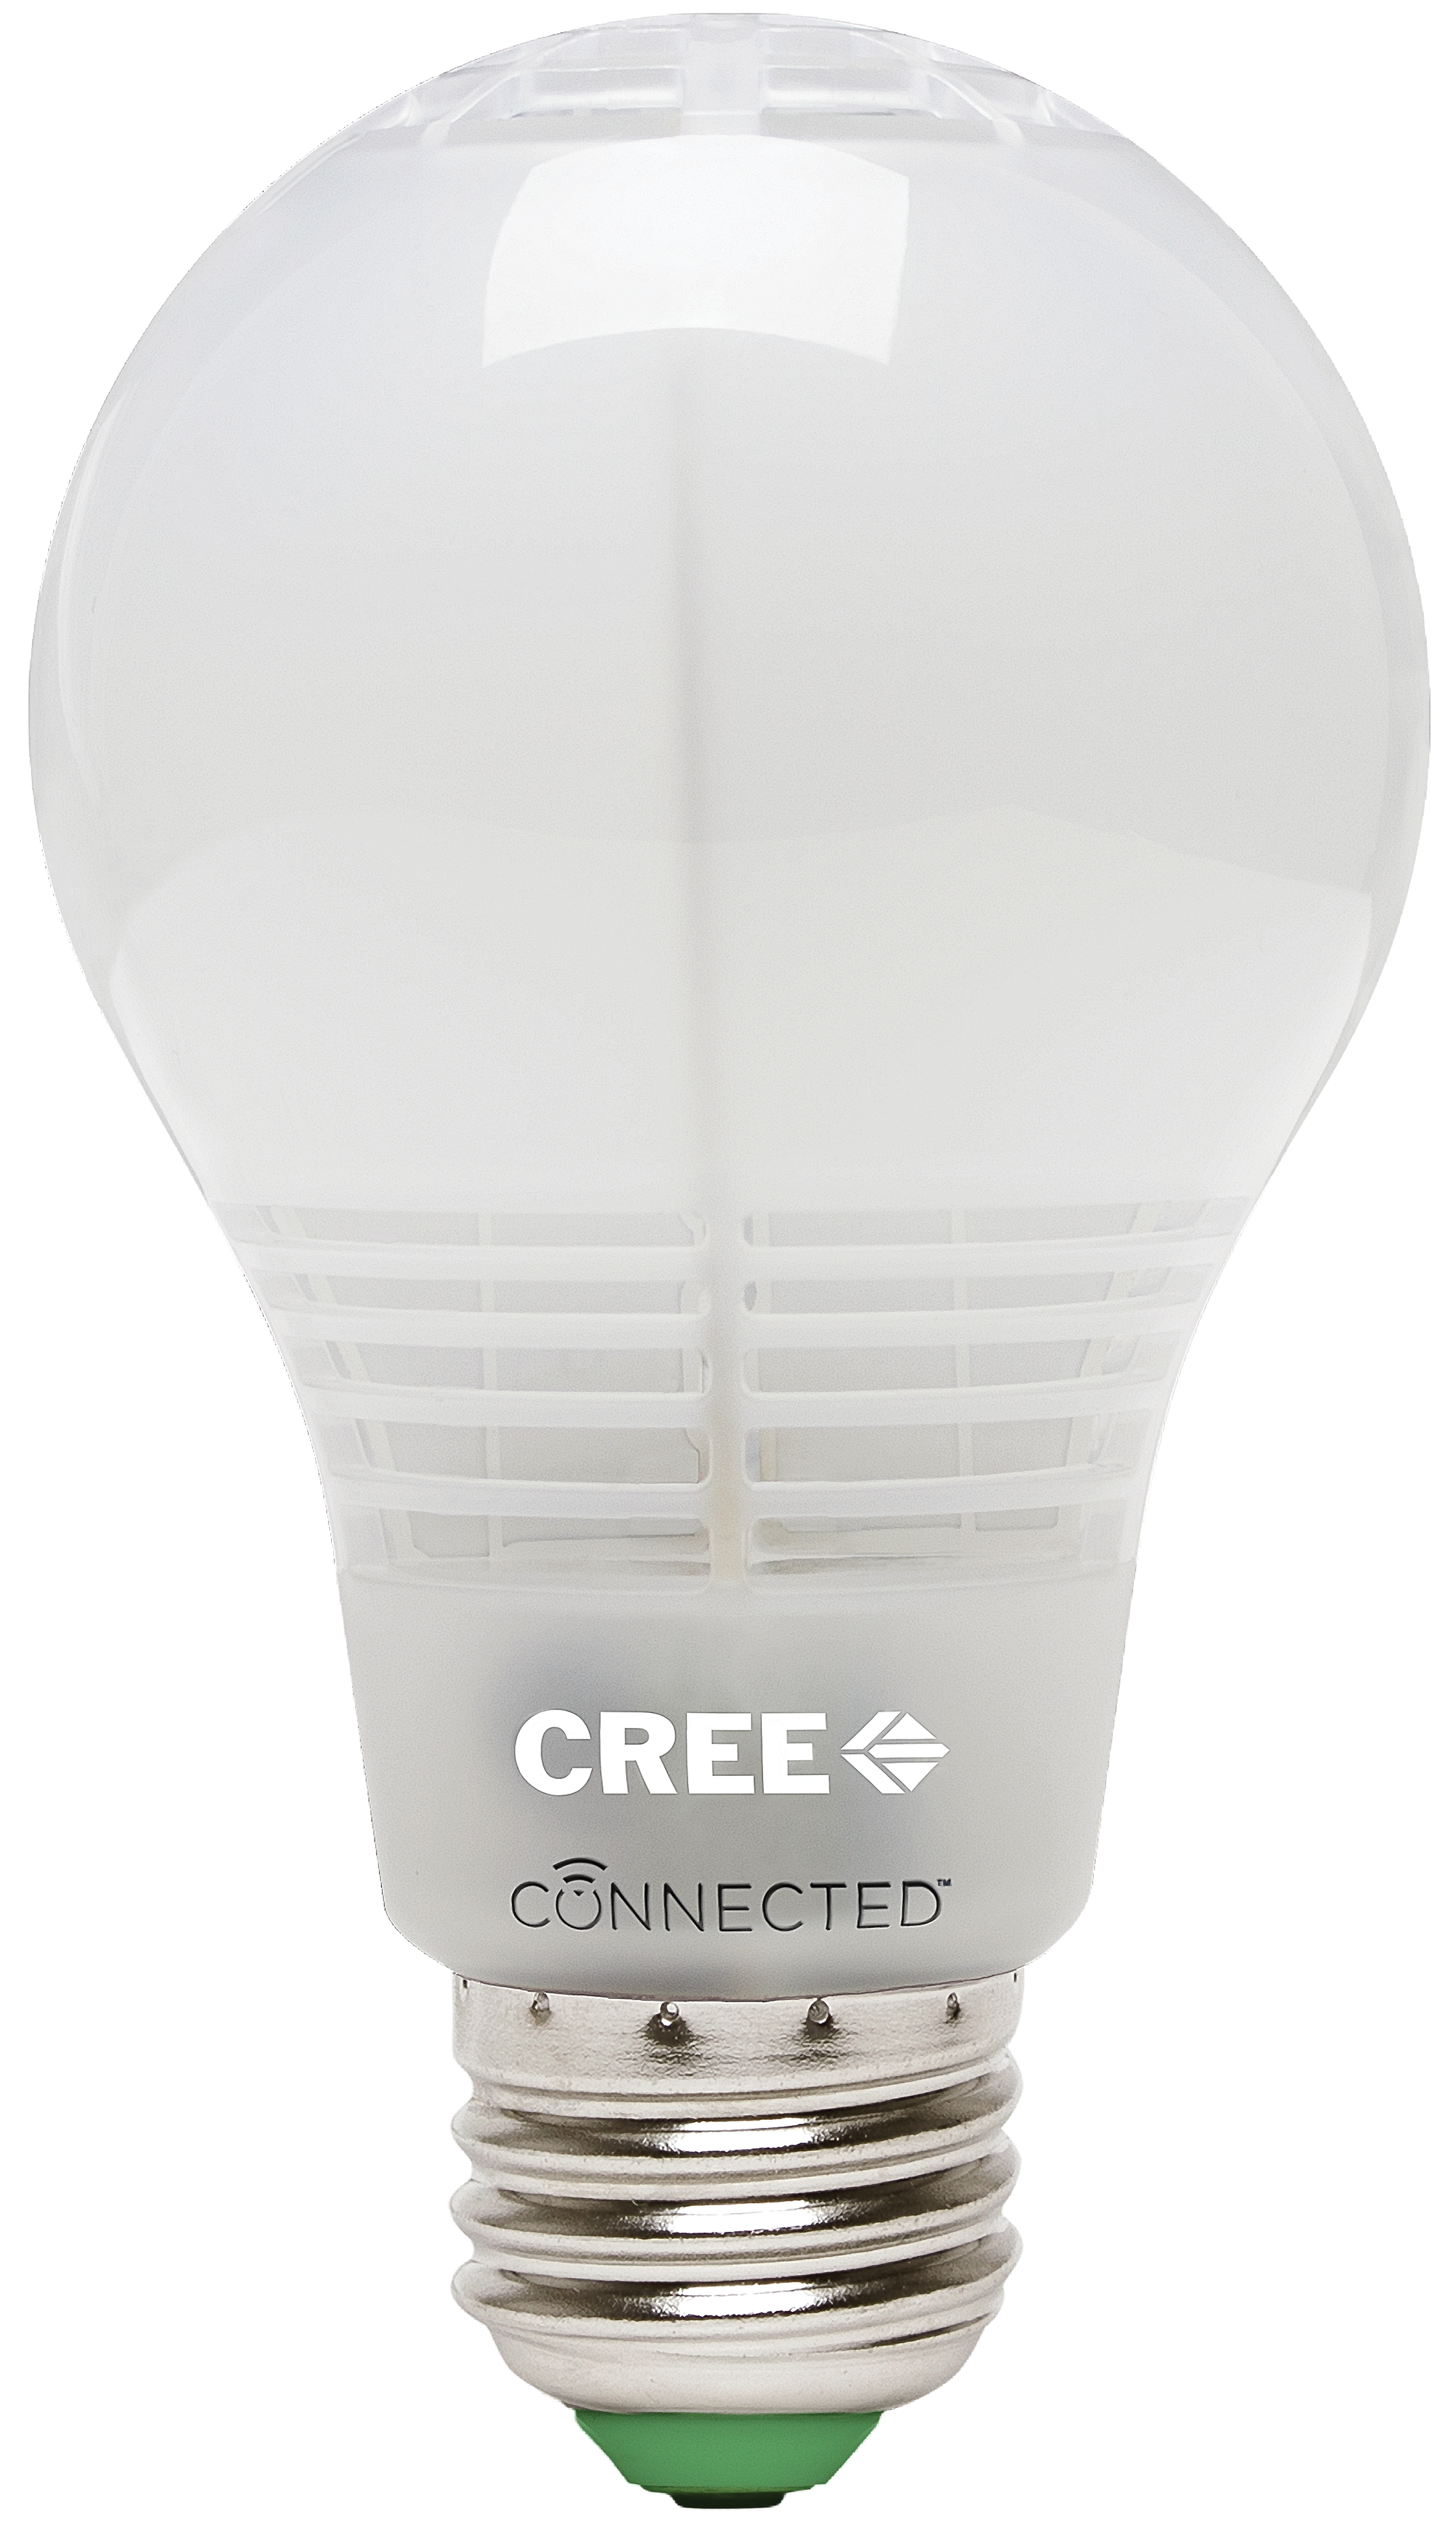 Cree light bulb